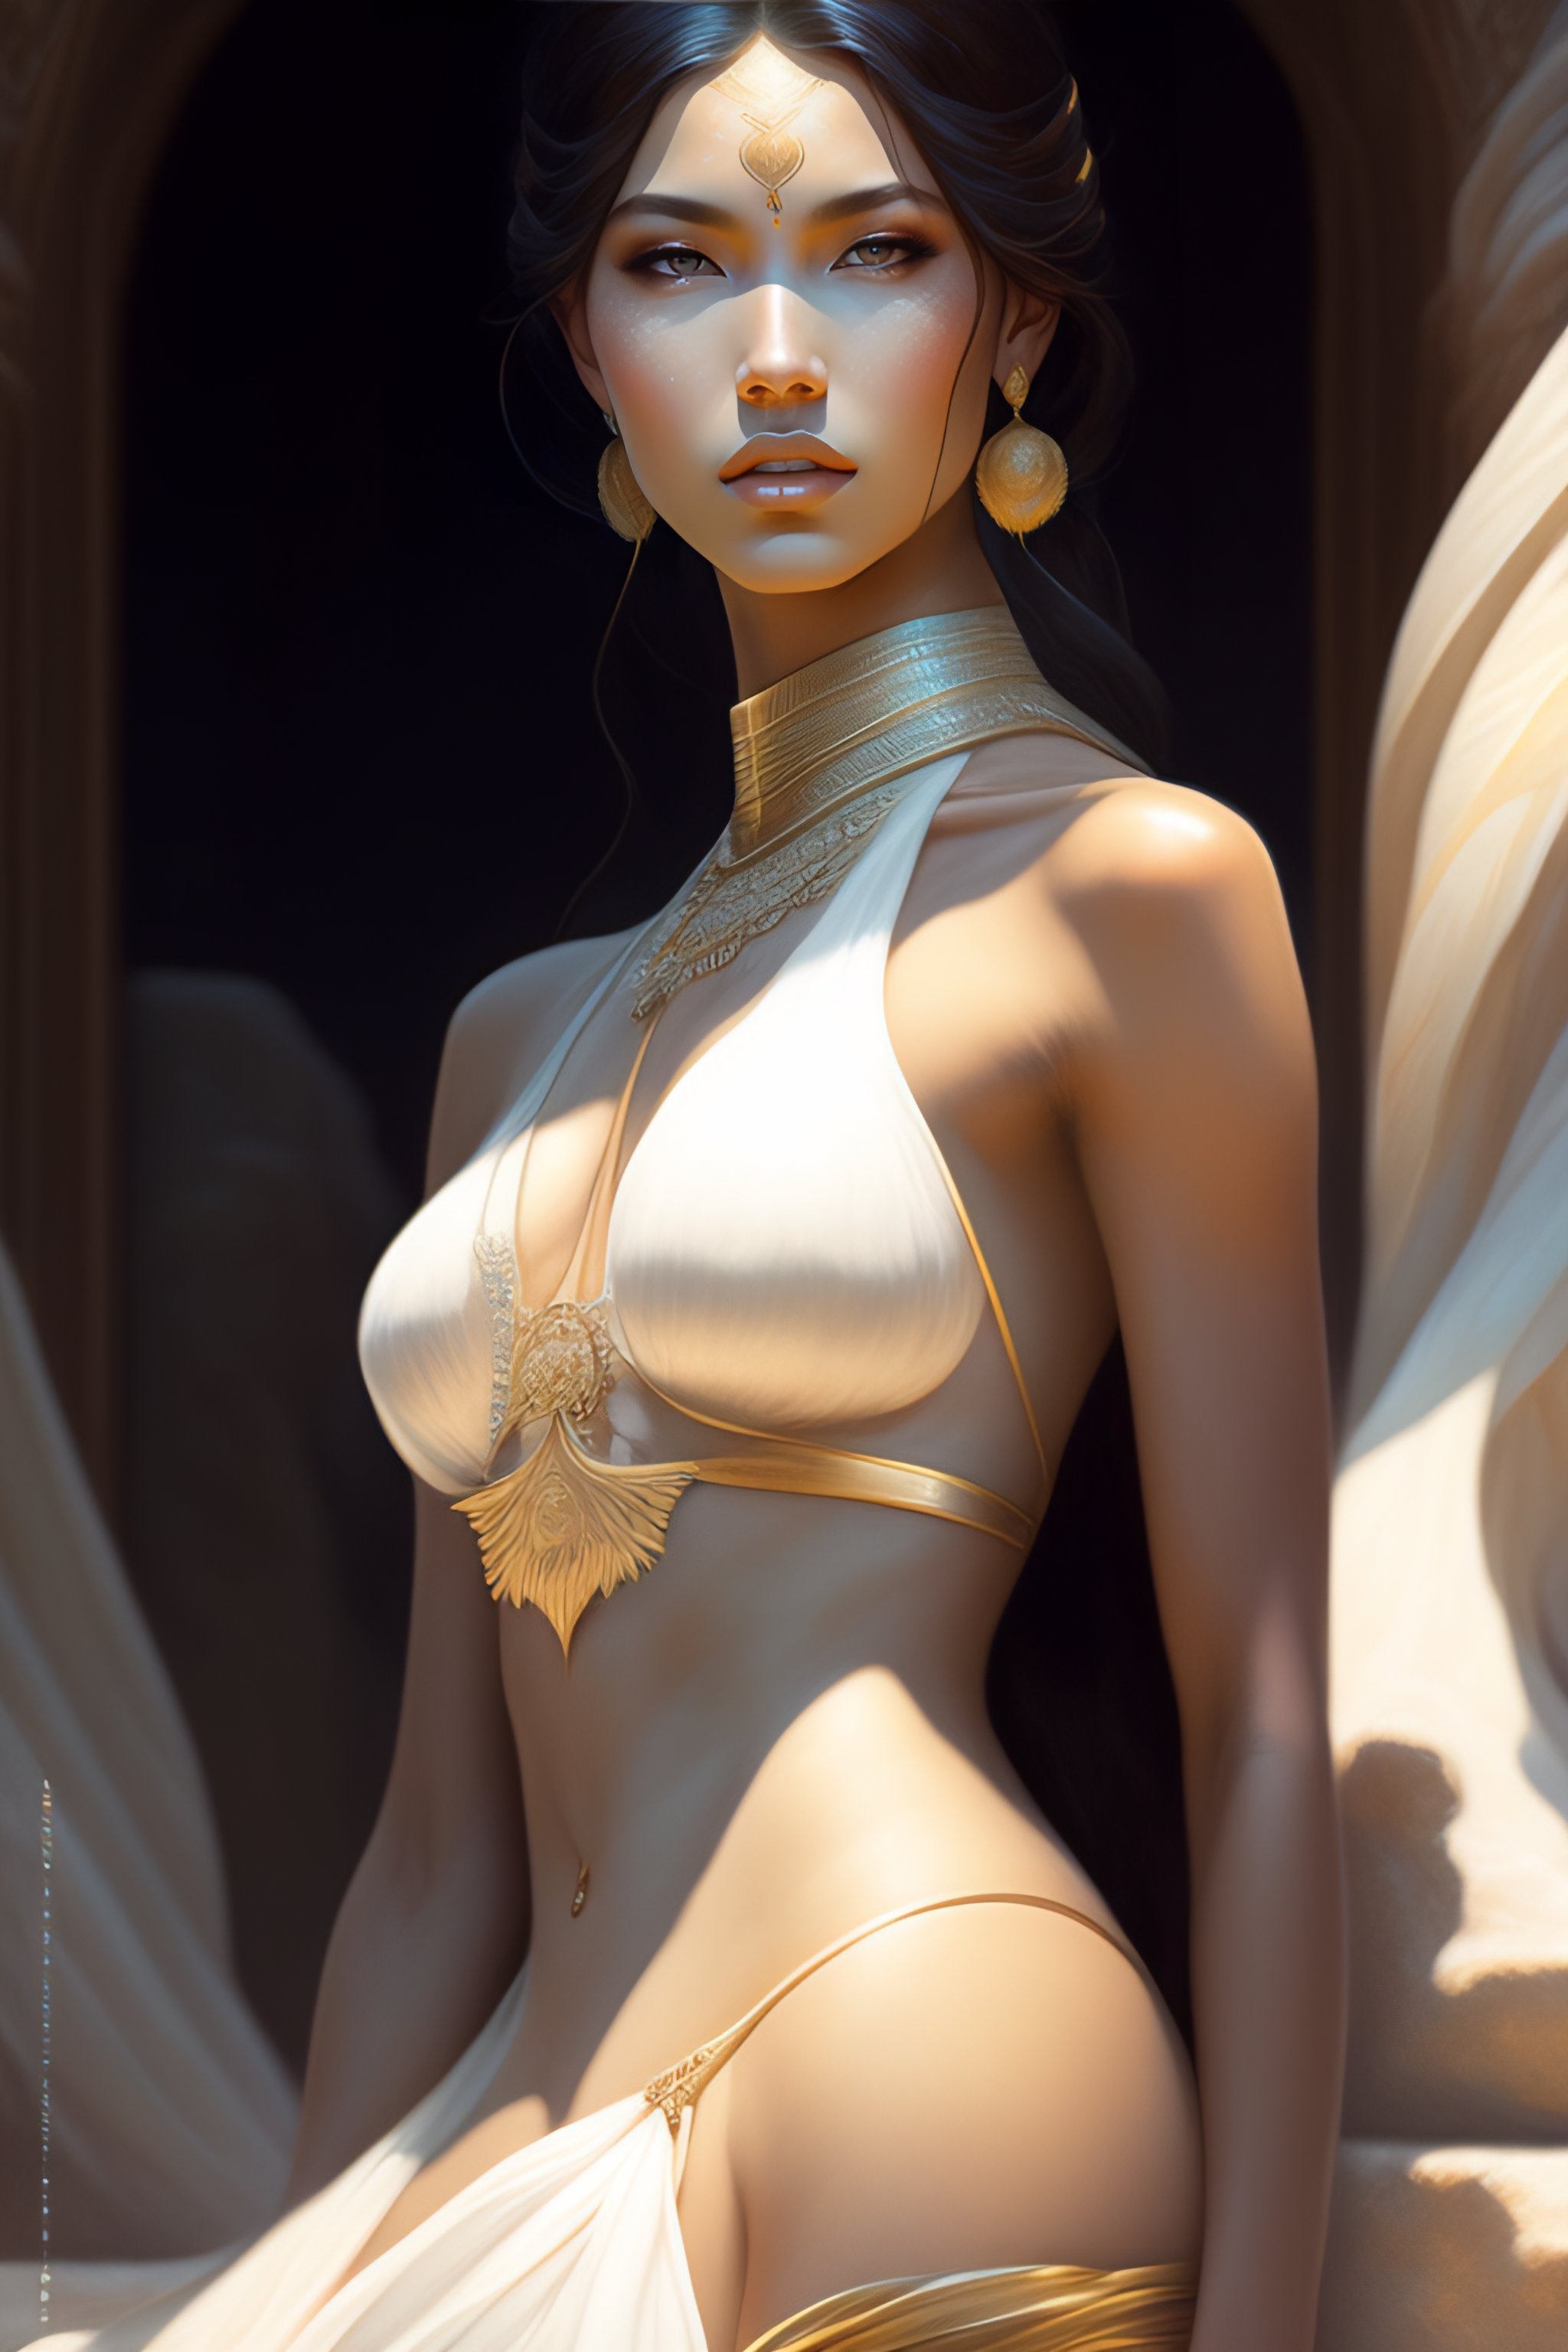 Lexica - Full body shot of super exquisite beautiful girl in intricate  pattern design golden bra,milky white skin body,golden ratio, digital  painting